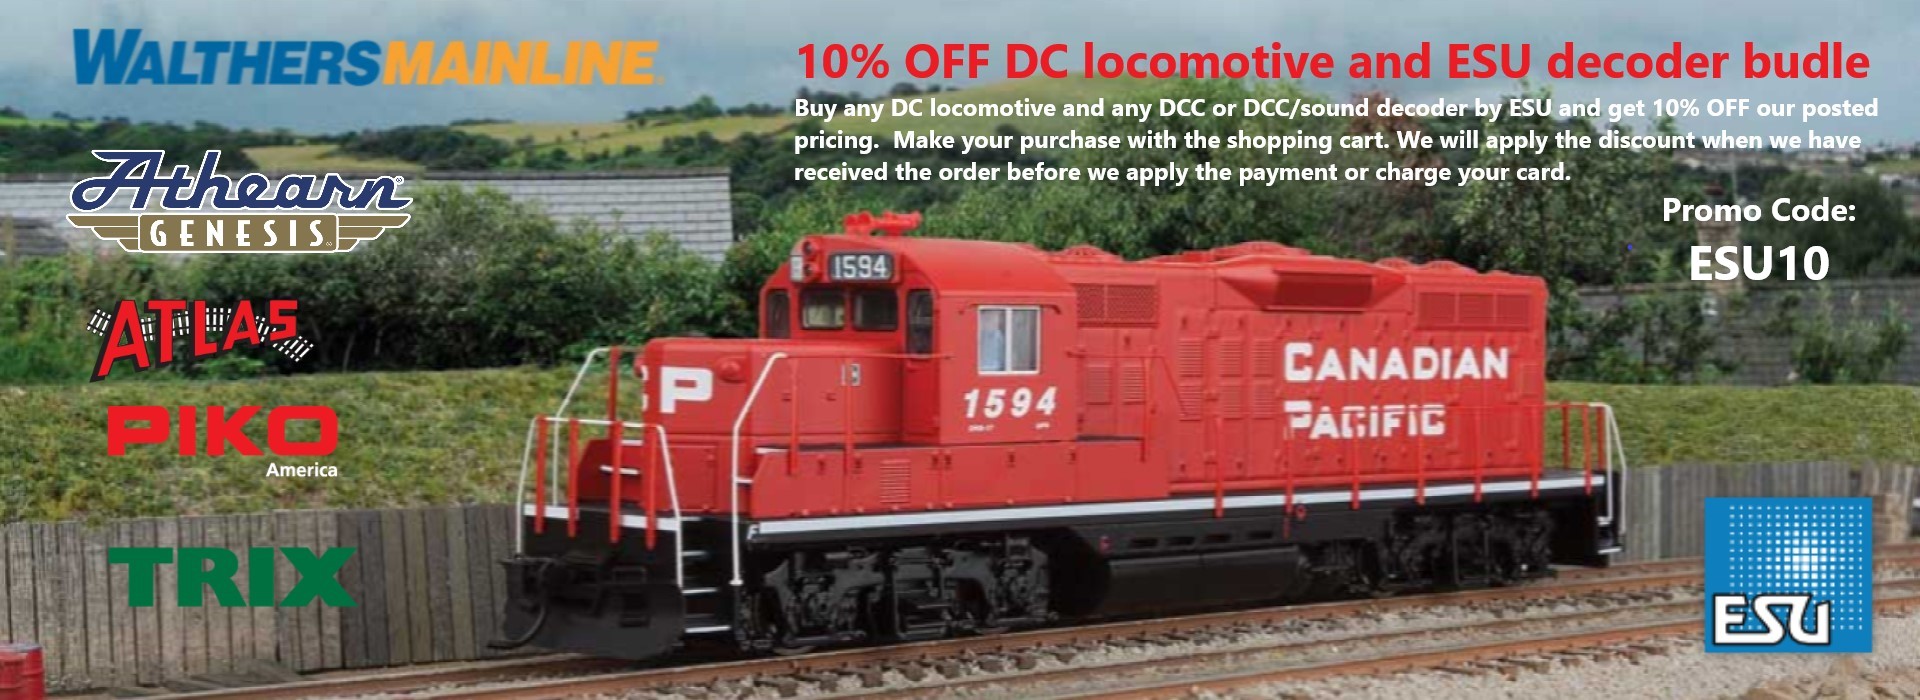 10% OFF DC locomotive and ESU decoder